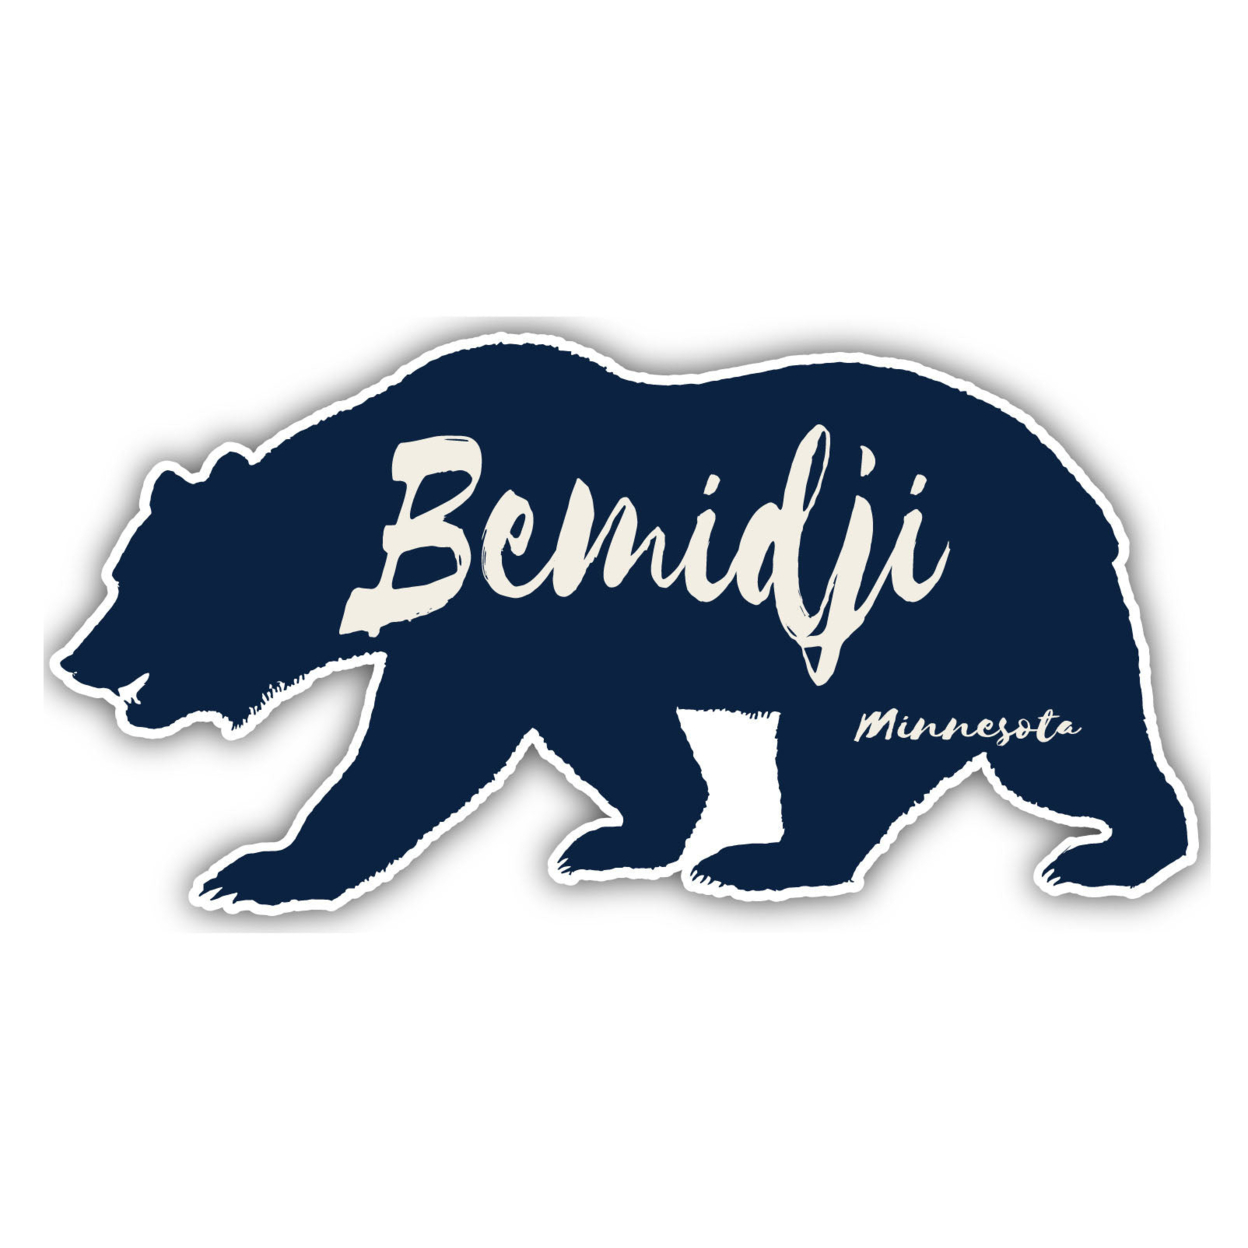 Bemidji Minnesota Souvenir Decorative Stickers (Choose Theme And Size) - 4-Pack, 12-Inch, Tent